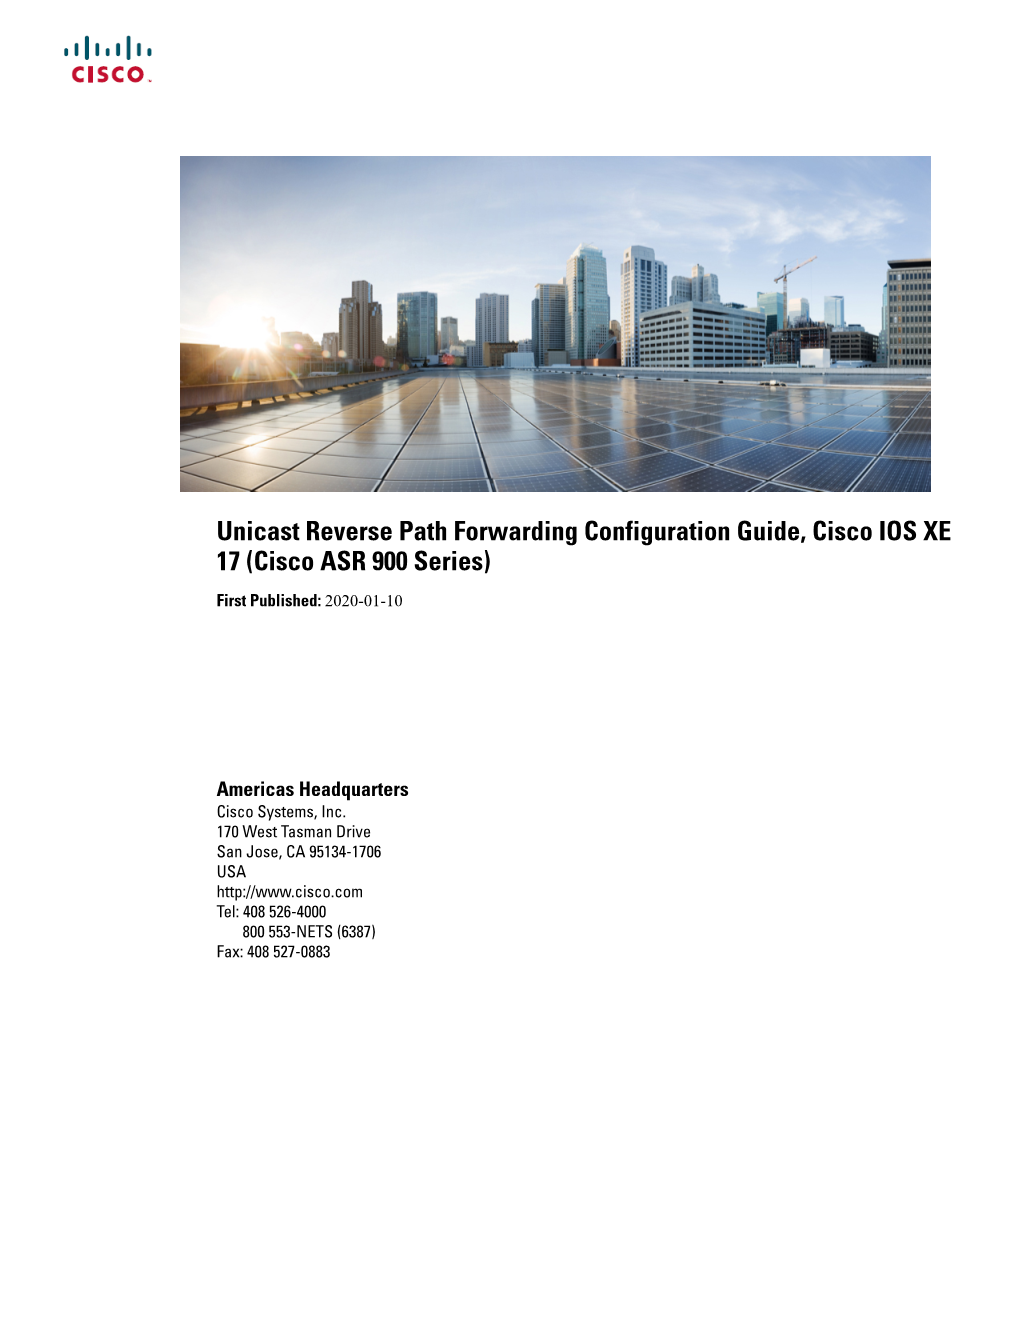 Unicast Reverse Path Forwarding Configuration Guide, Cisco IOS XE 17 (Cisco ASR 900 Series)